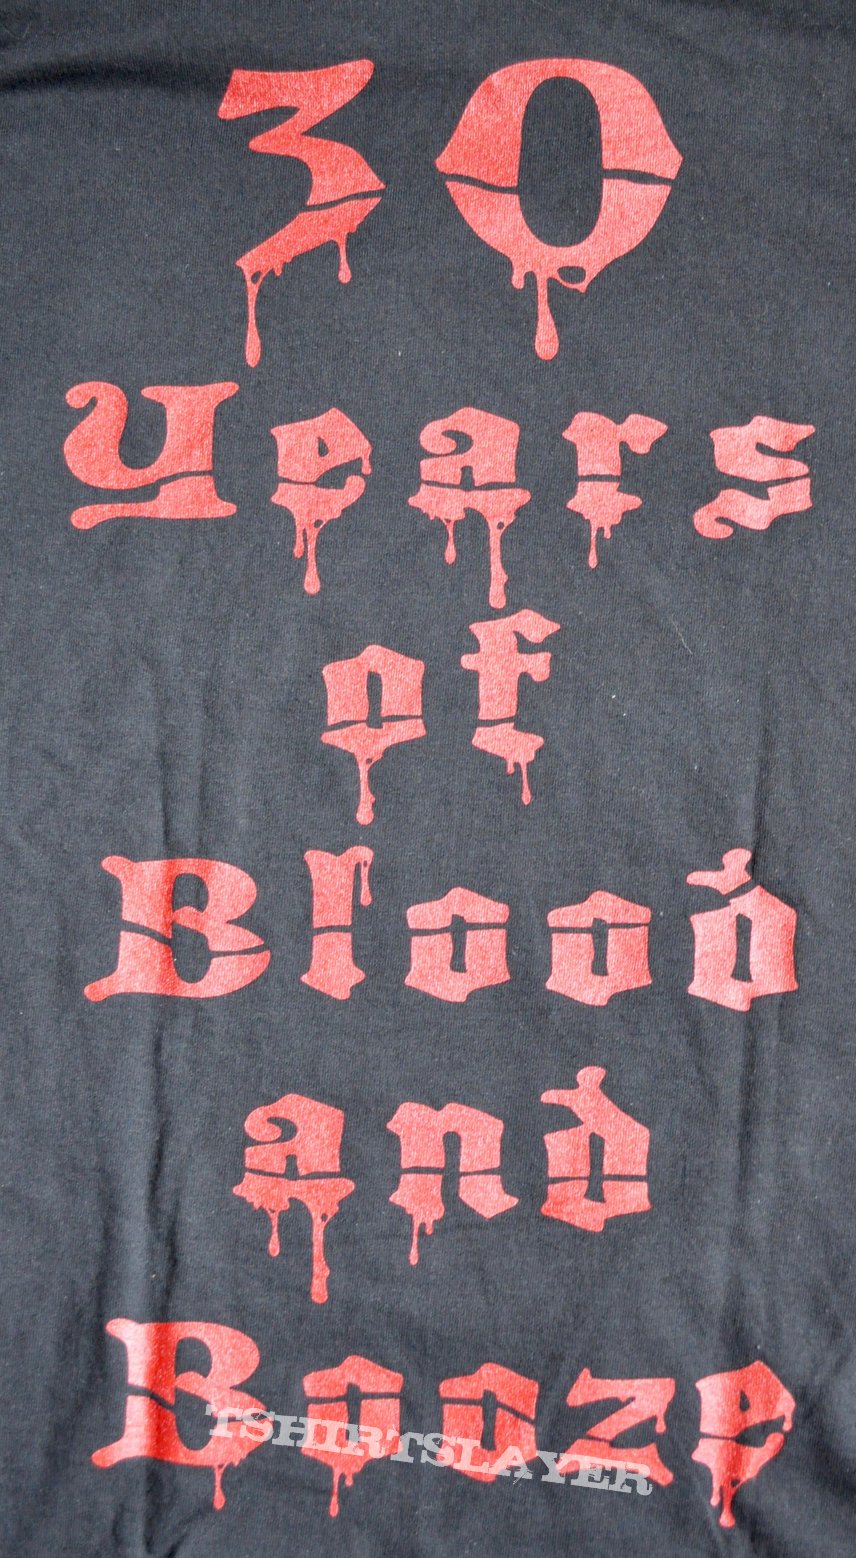 EXODUS 30 Years Of Blood And Booze Original Tour Shirt